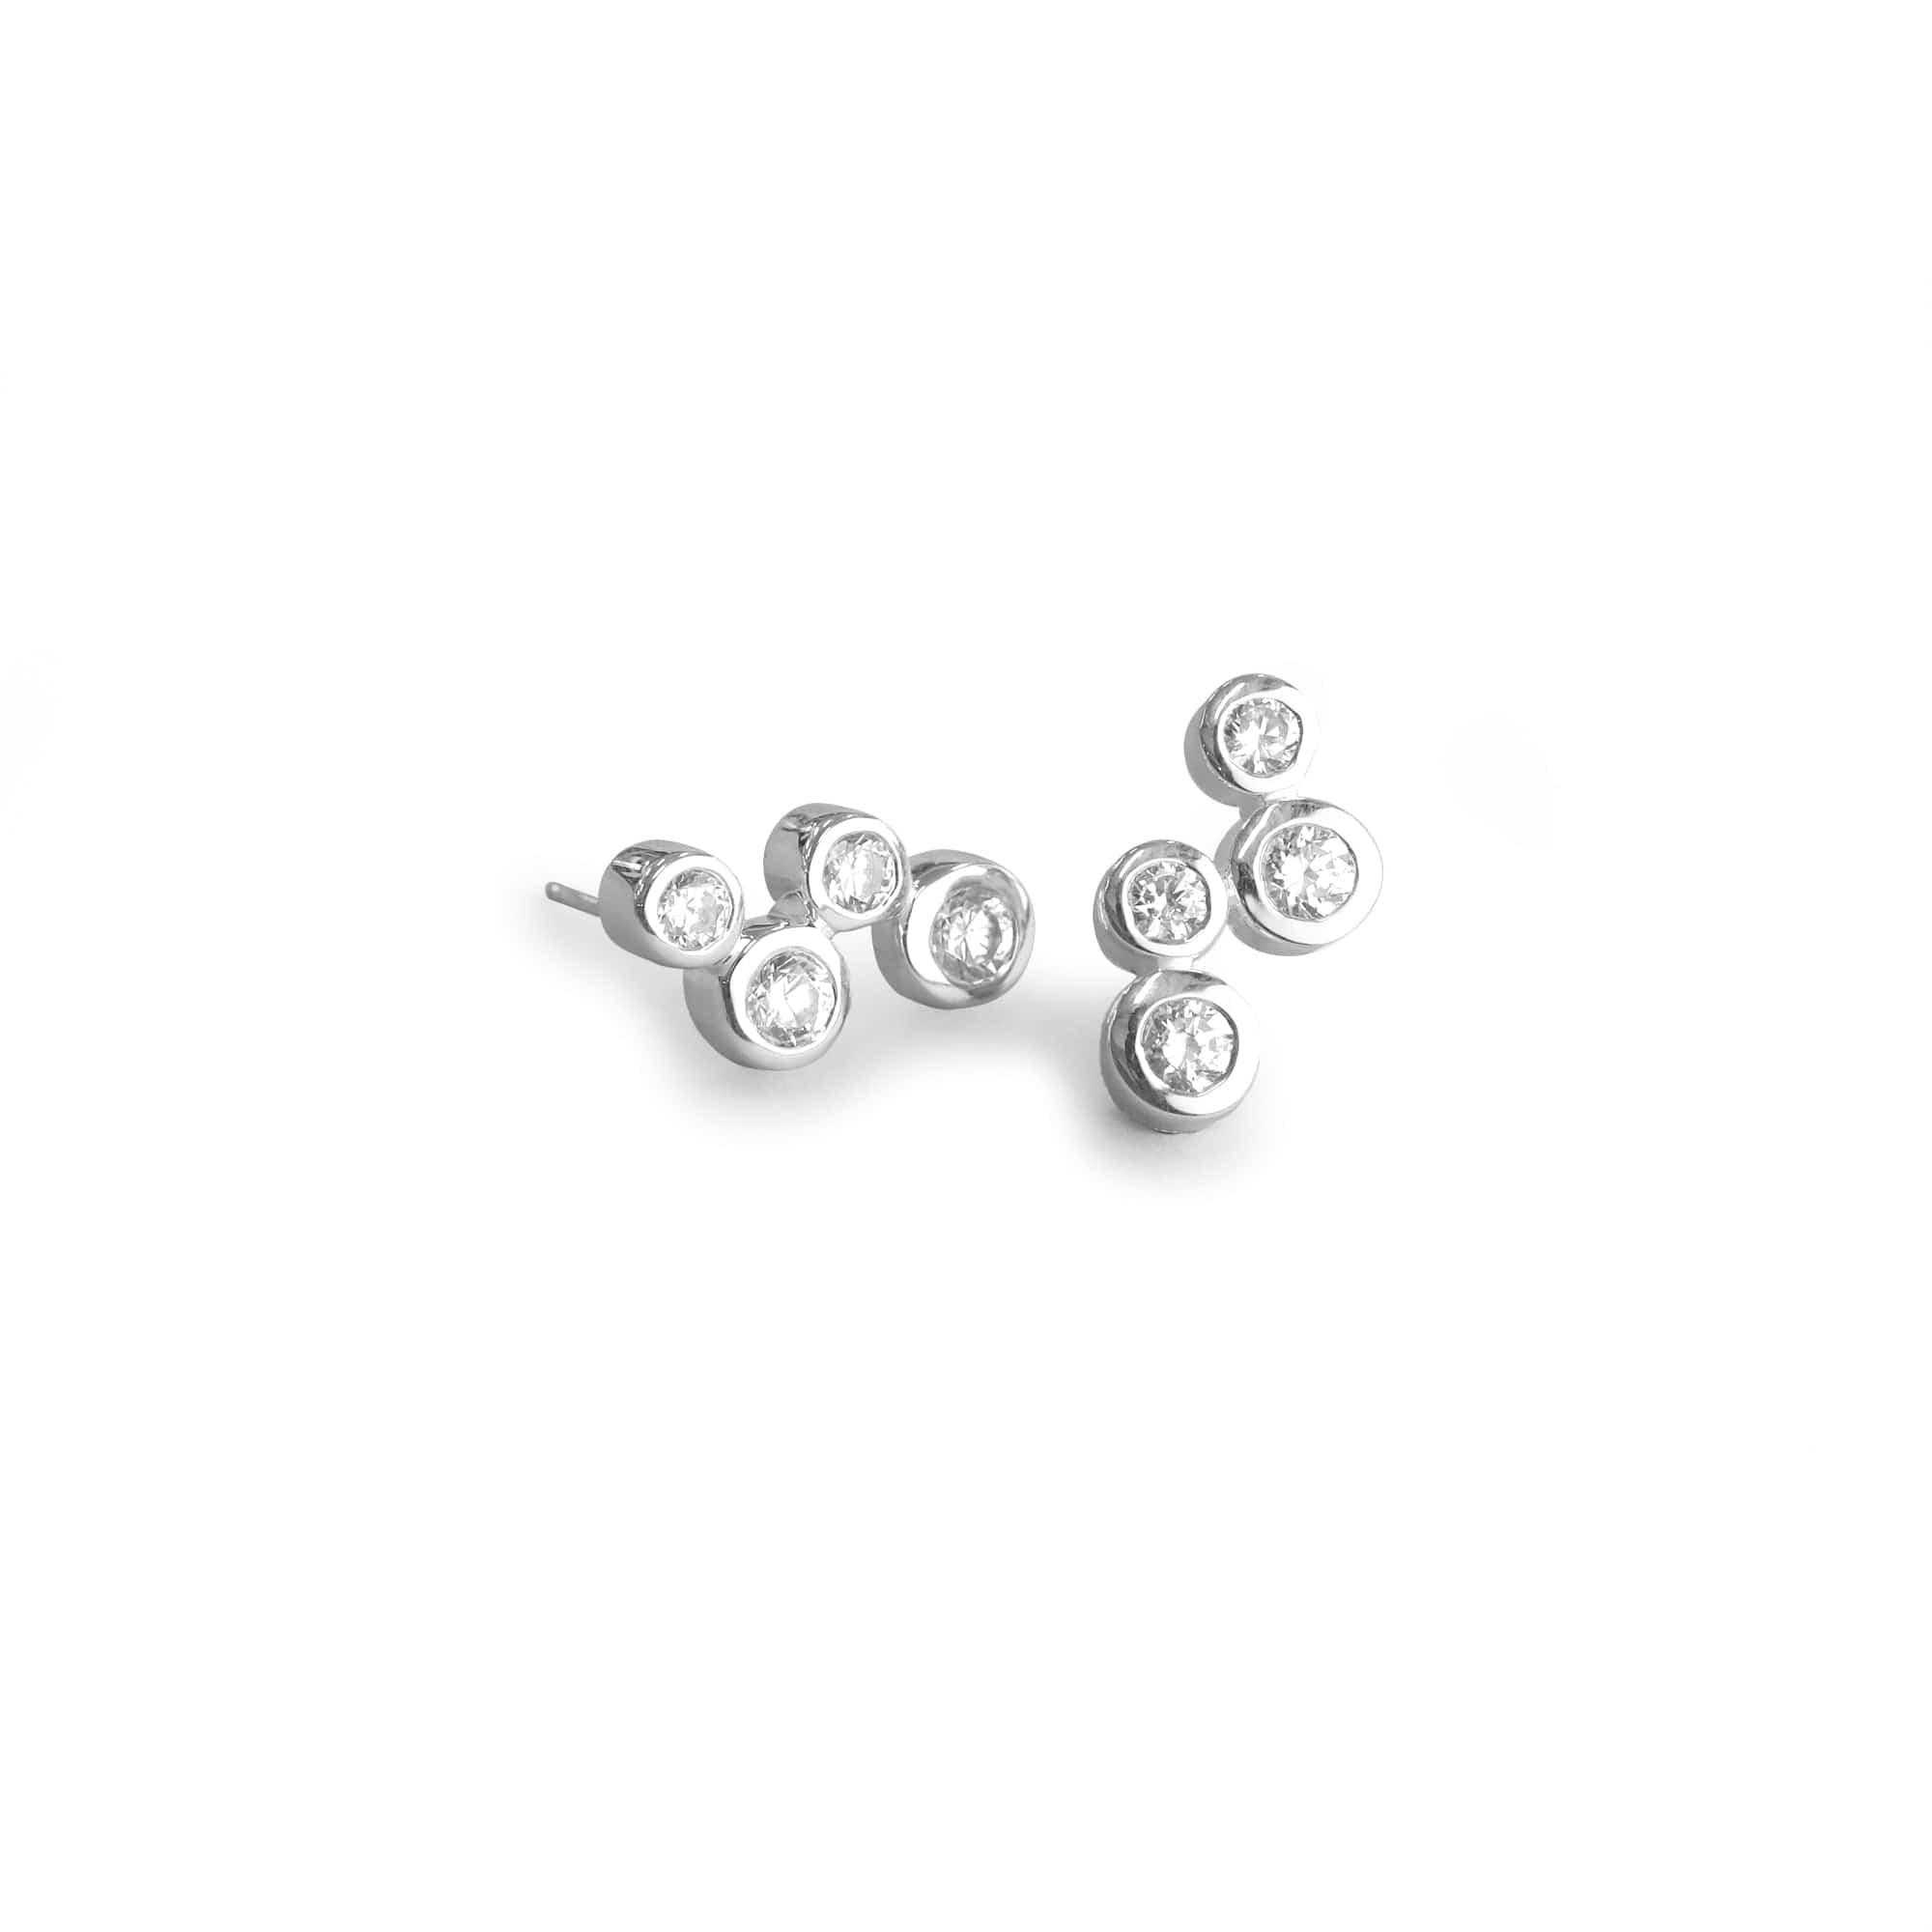 Boma Jewelry Earrings CZ Circle Earrings Studs